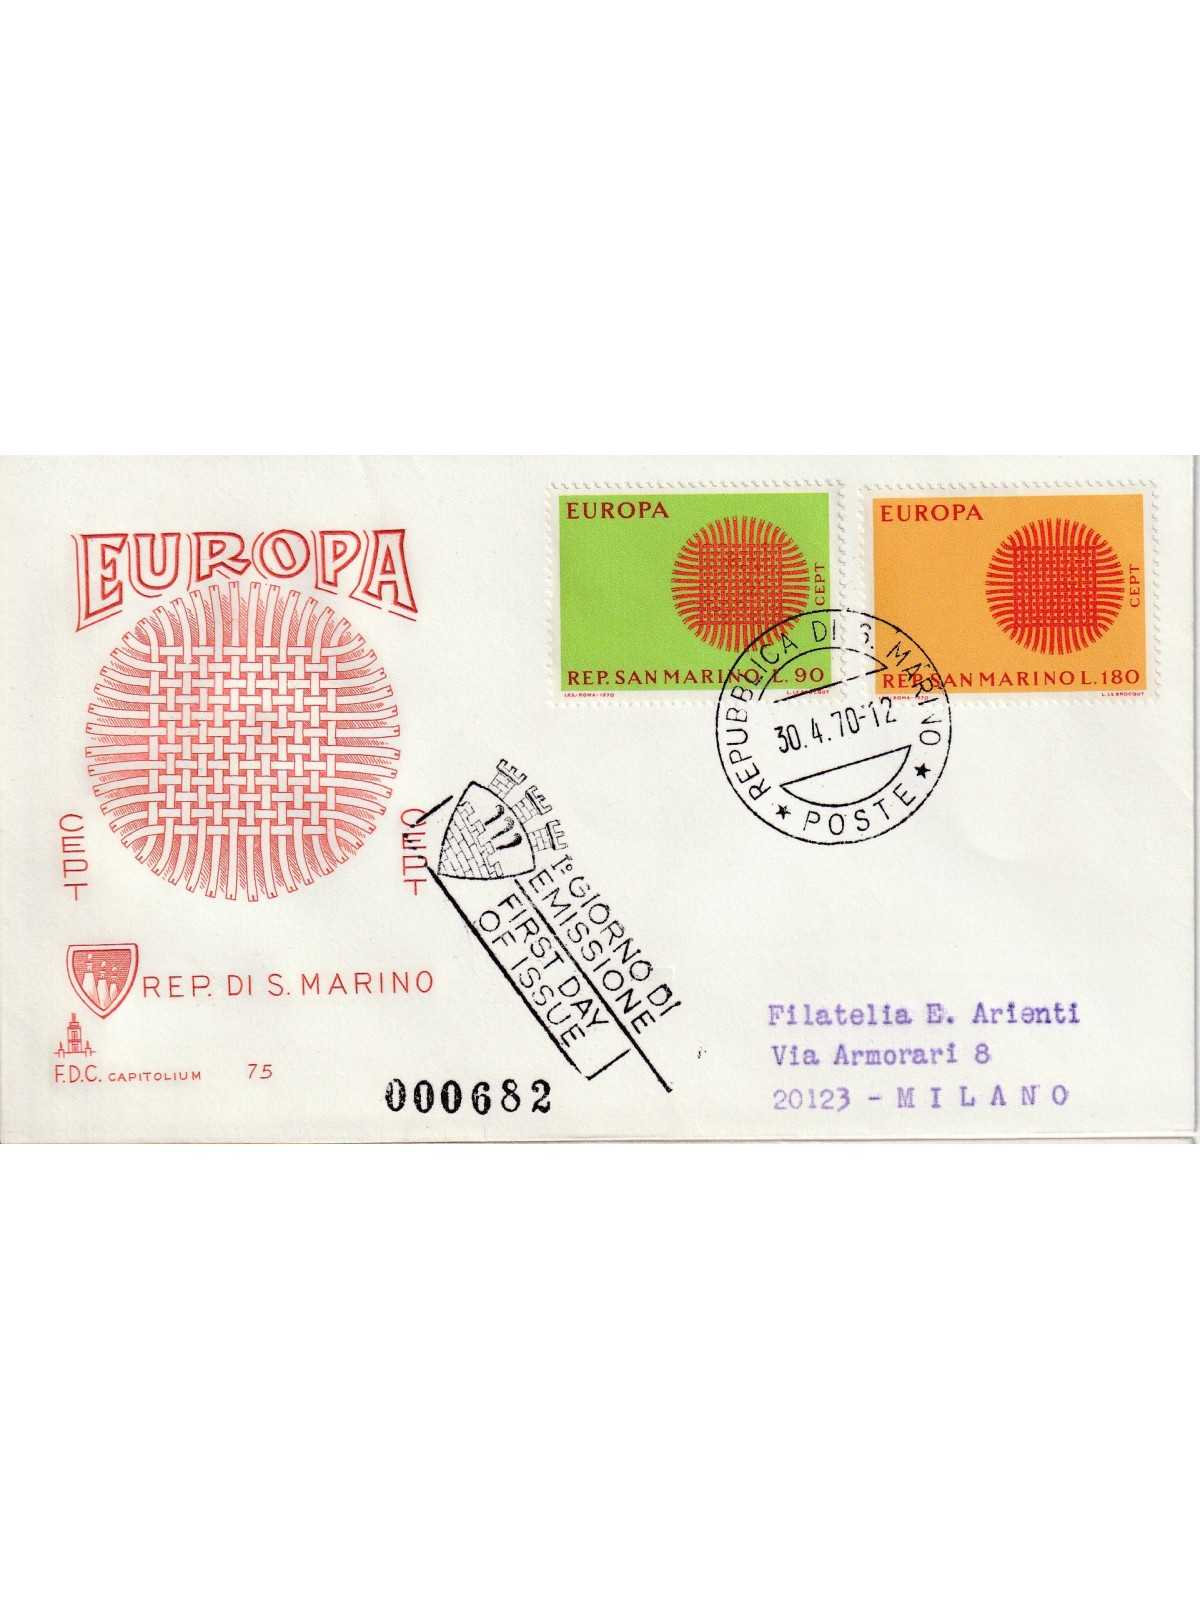 1970 FDC CAPITOLIUM SAN MARINO EUROPA 1970 MF81603